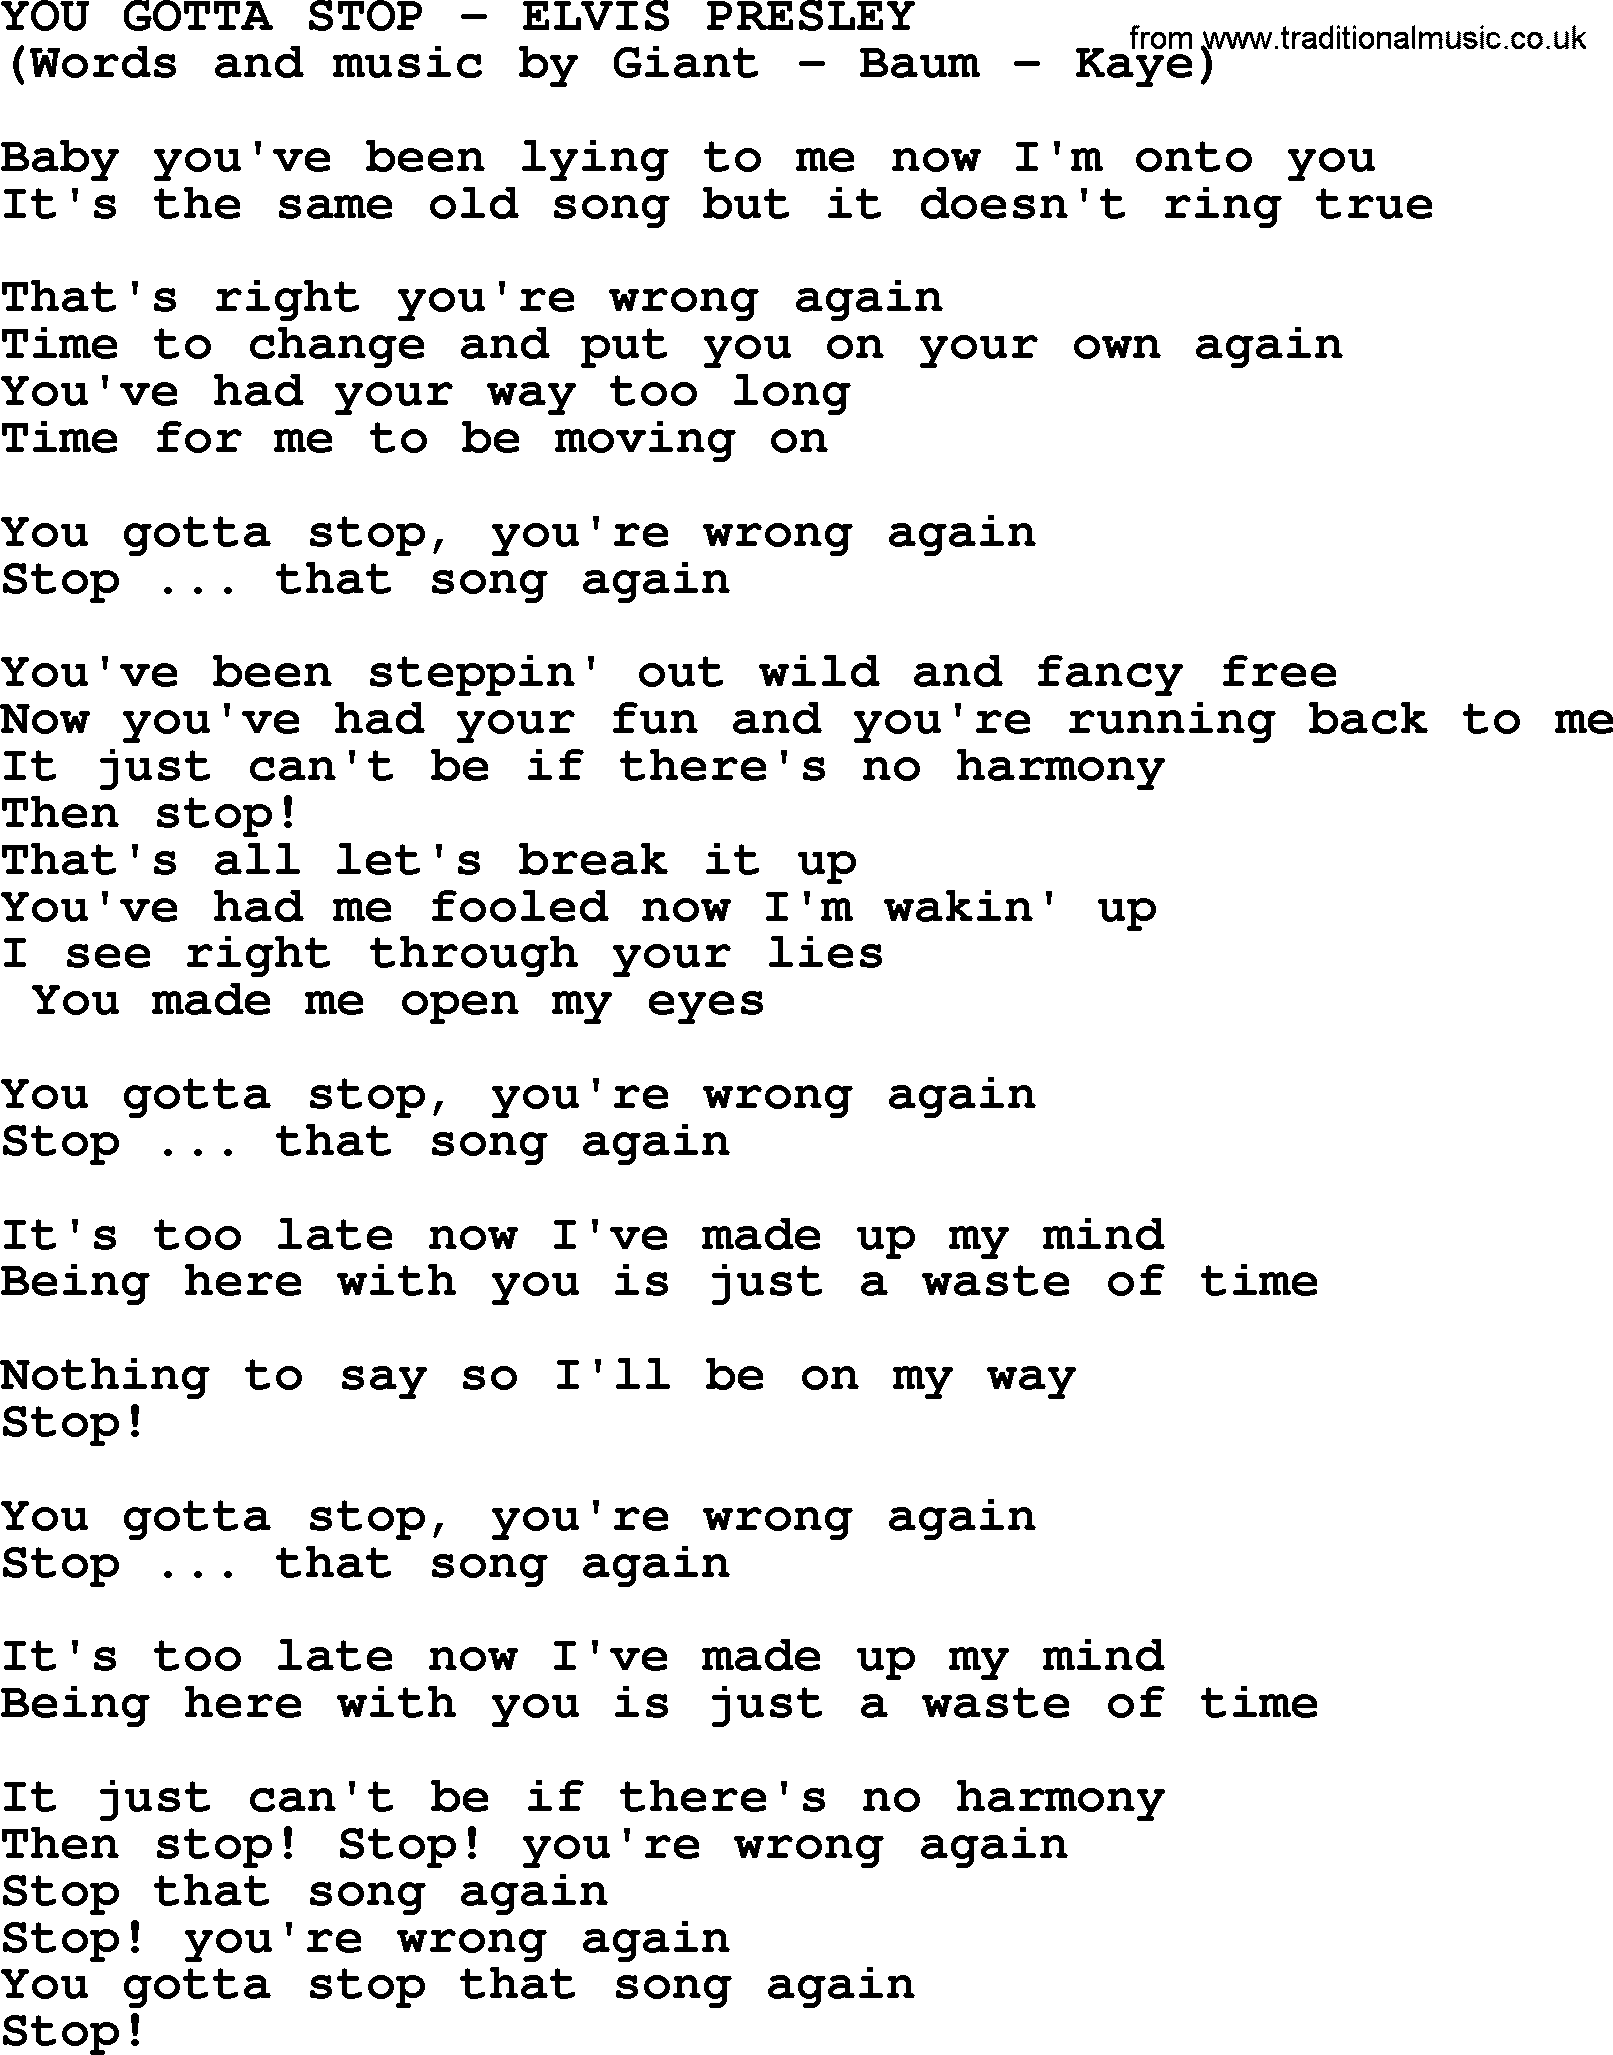 Elvis Presley song: You Gotta Stop lyrics